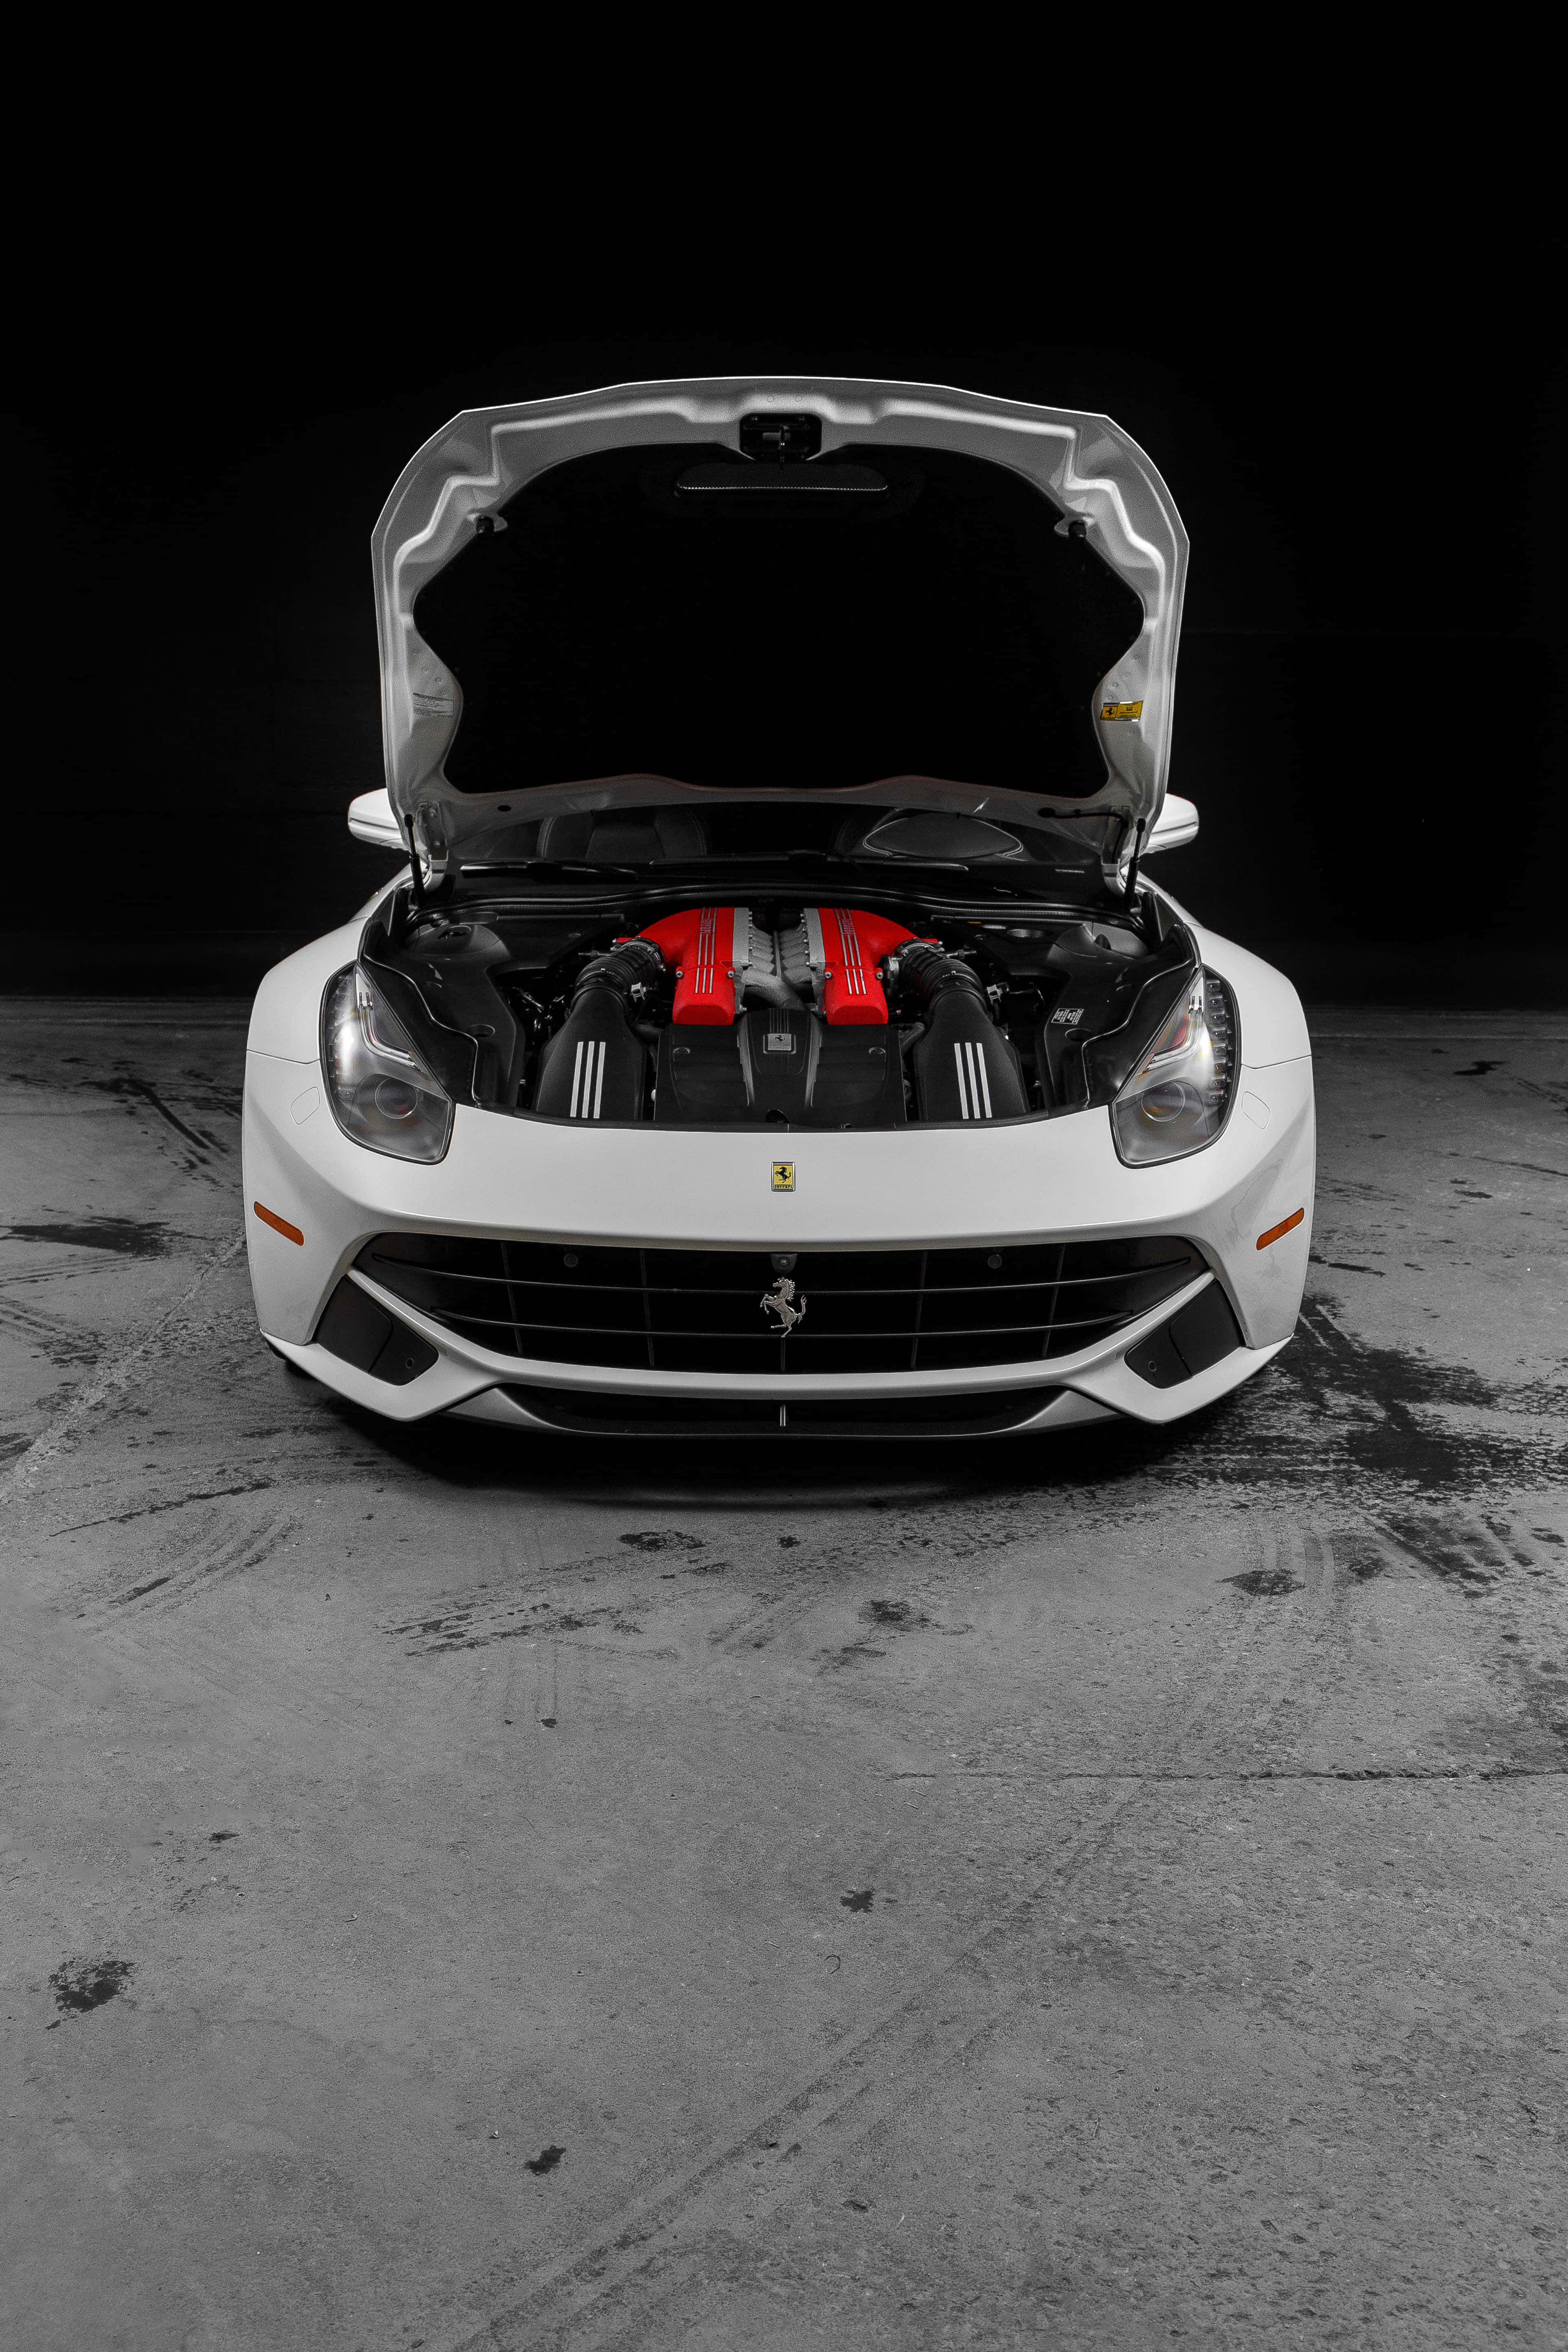 The Ultimate Luxury - White Ferrari iPhone Wallpaper